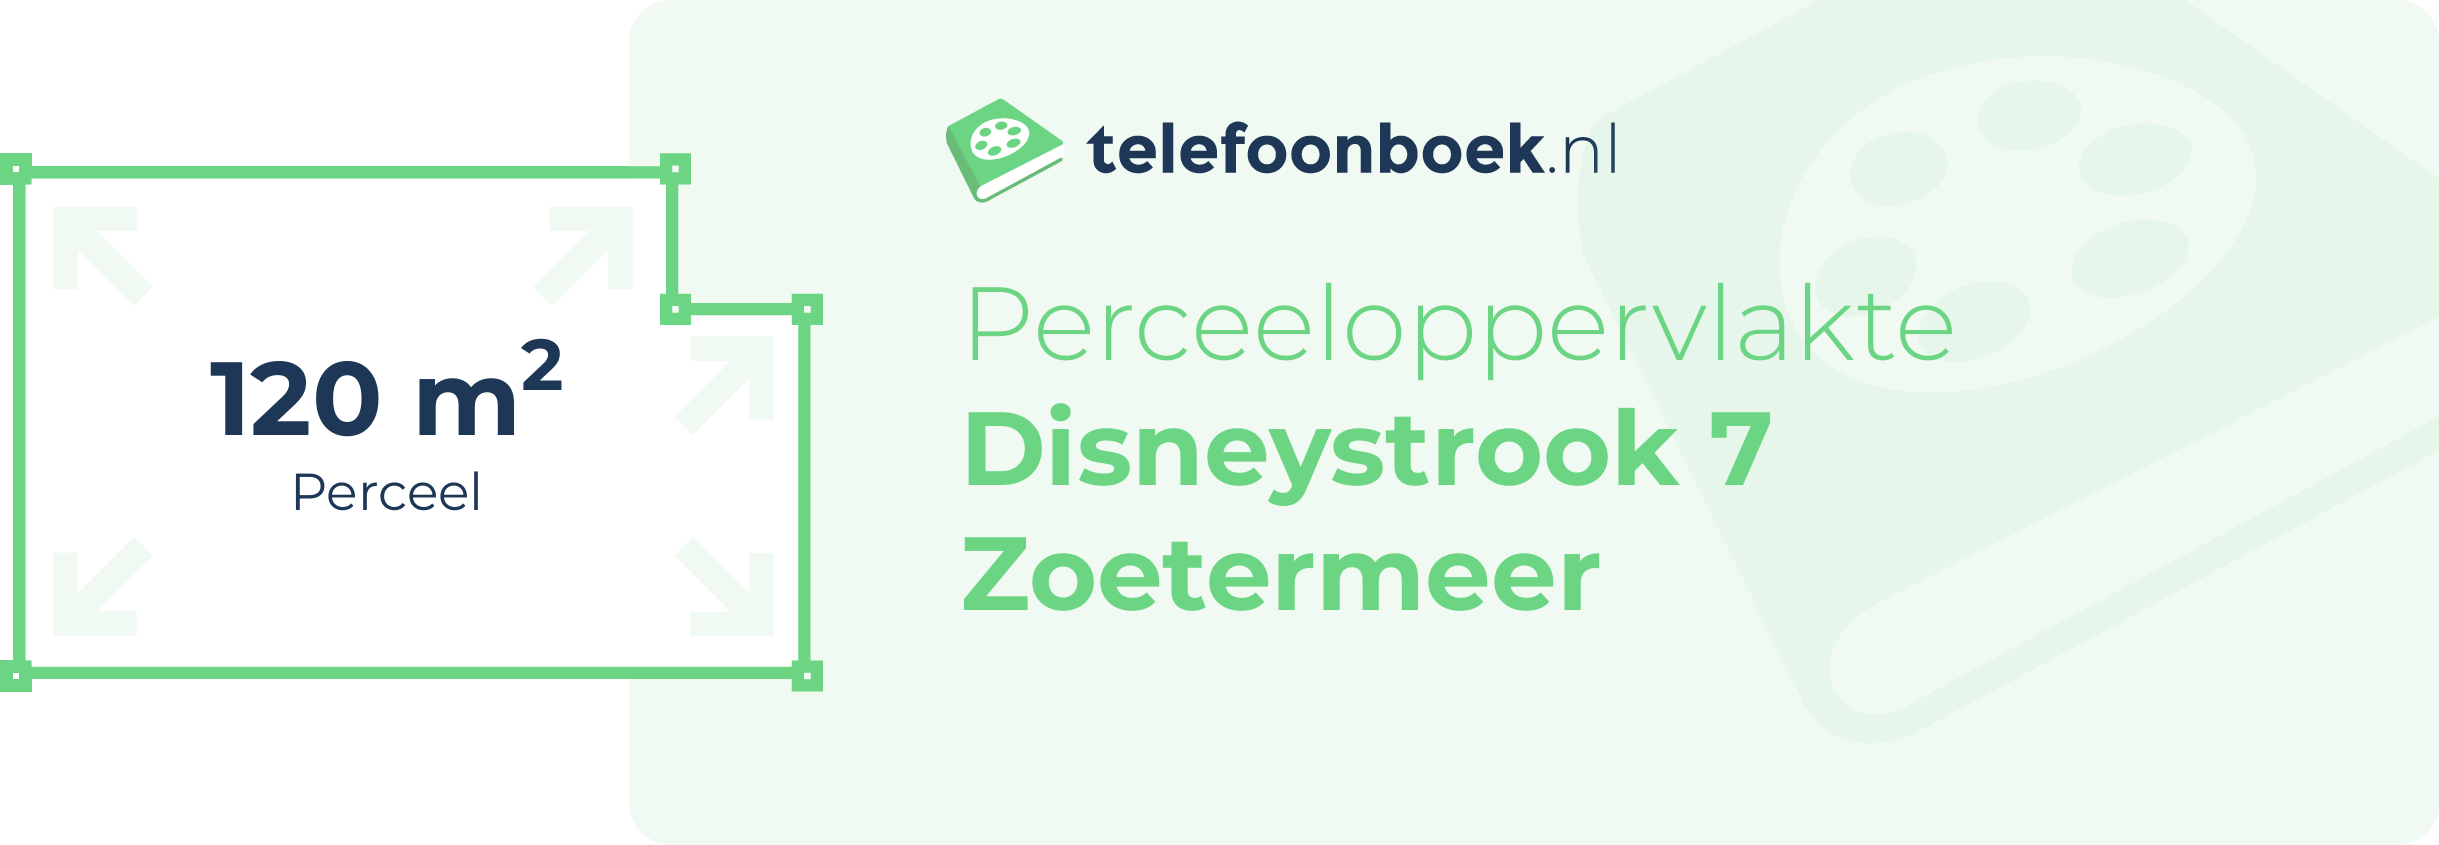 Perceeloppervlakte Disneystrook 7 Zoetermeer